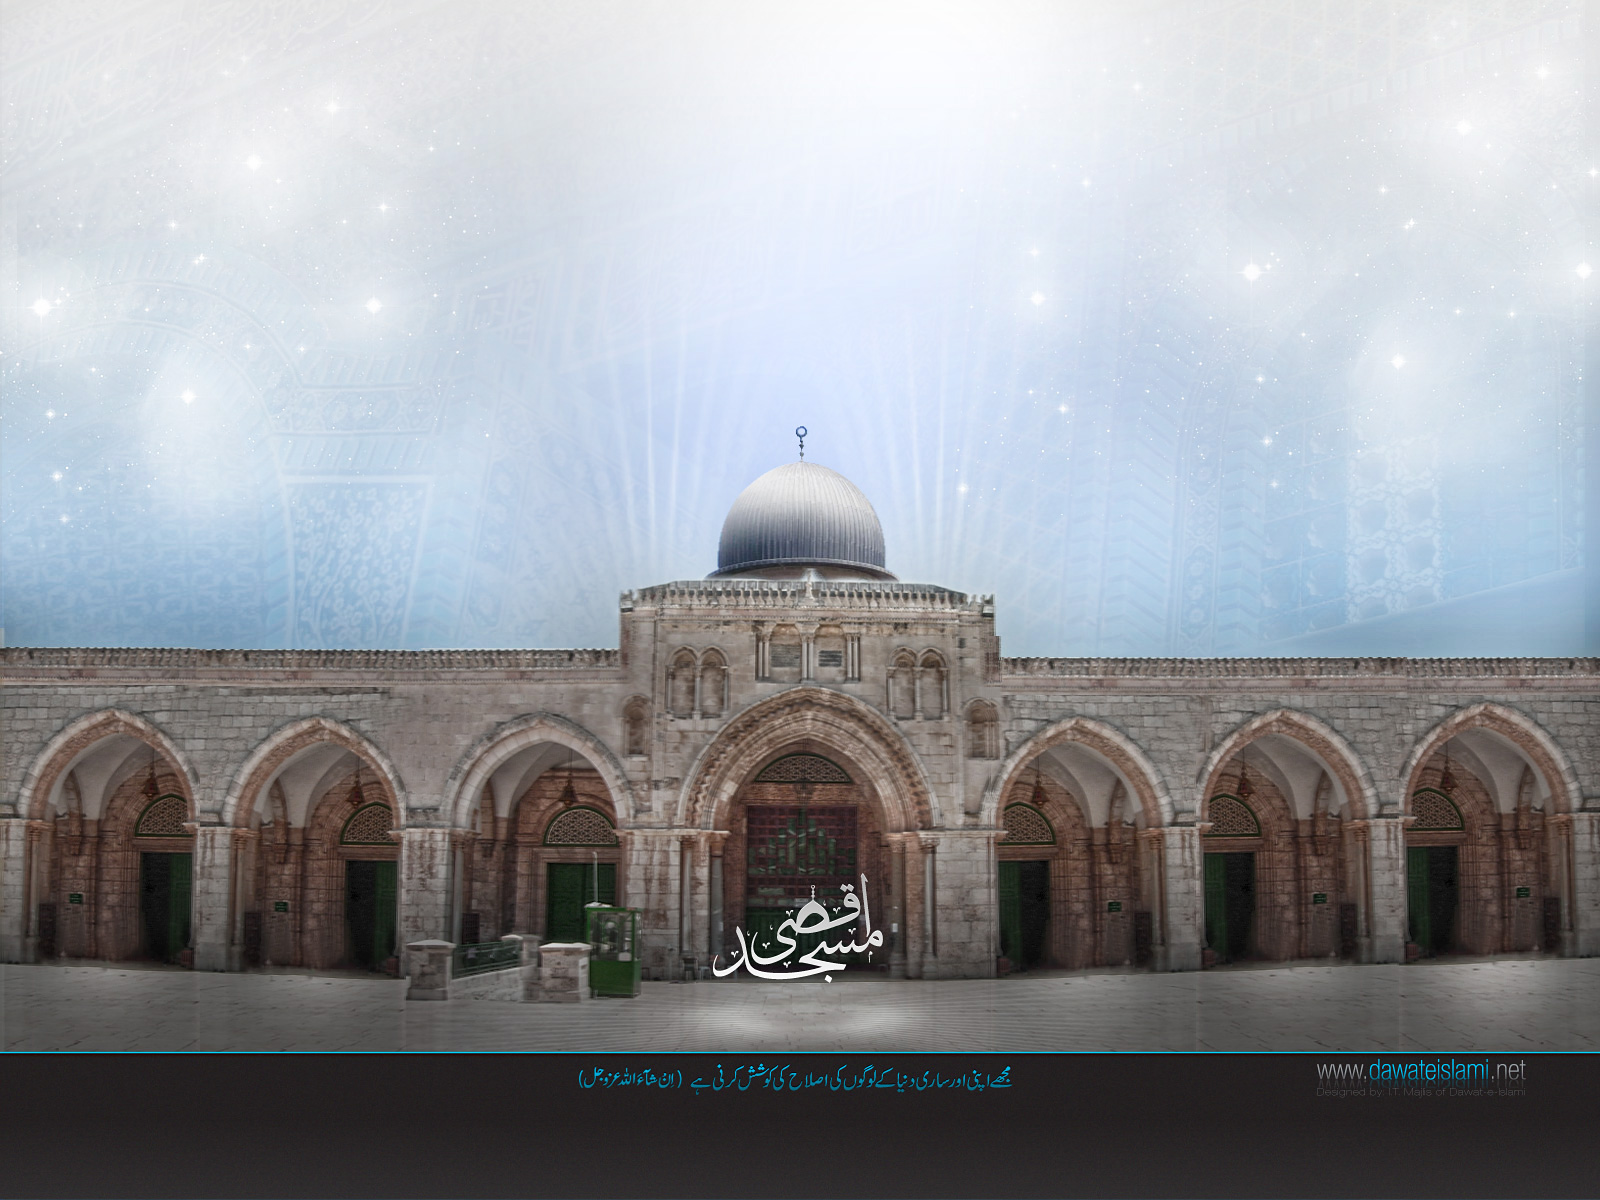 Al Aqsa Mosque by kashif-k on DeviantArt